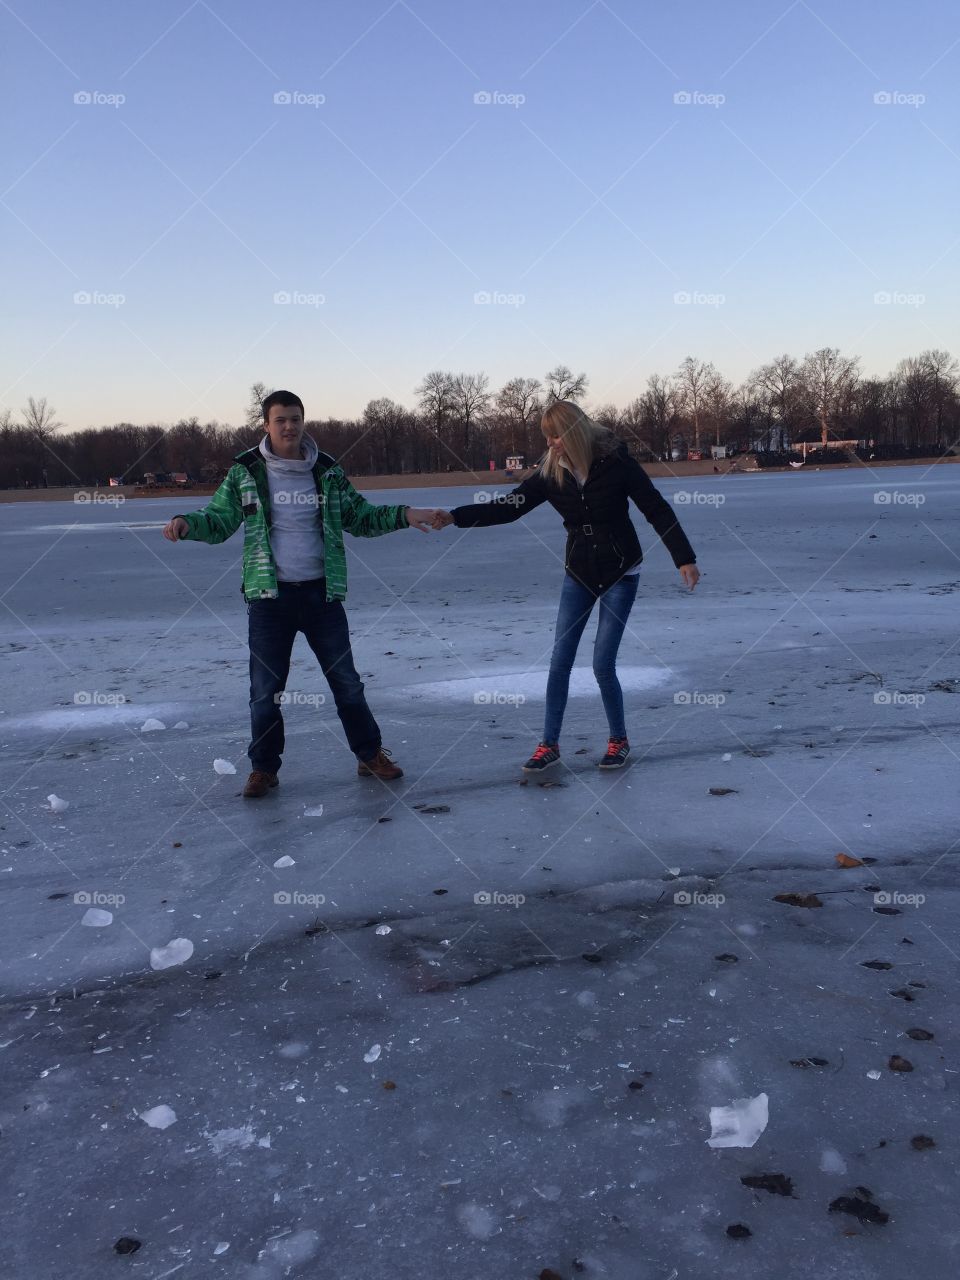 On the ice